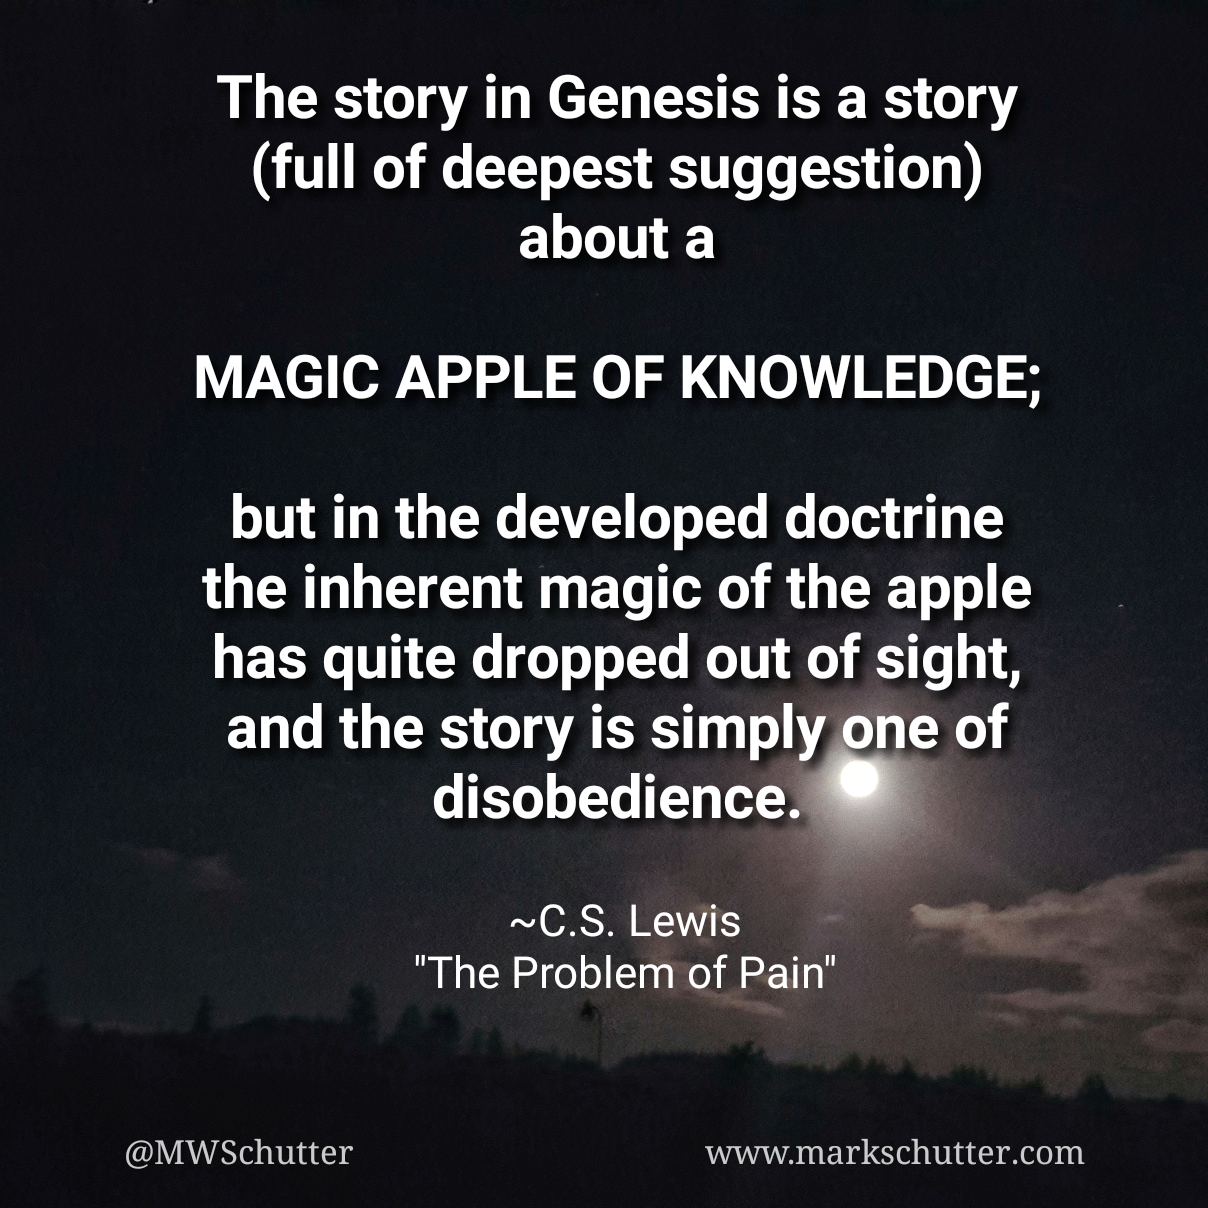 A Magic Apple of Knowledge